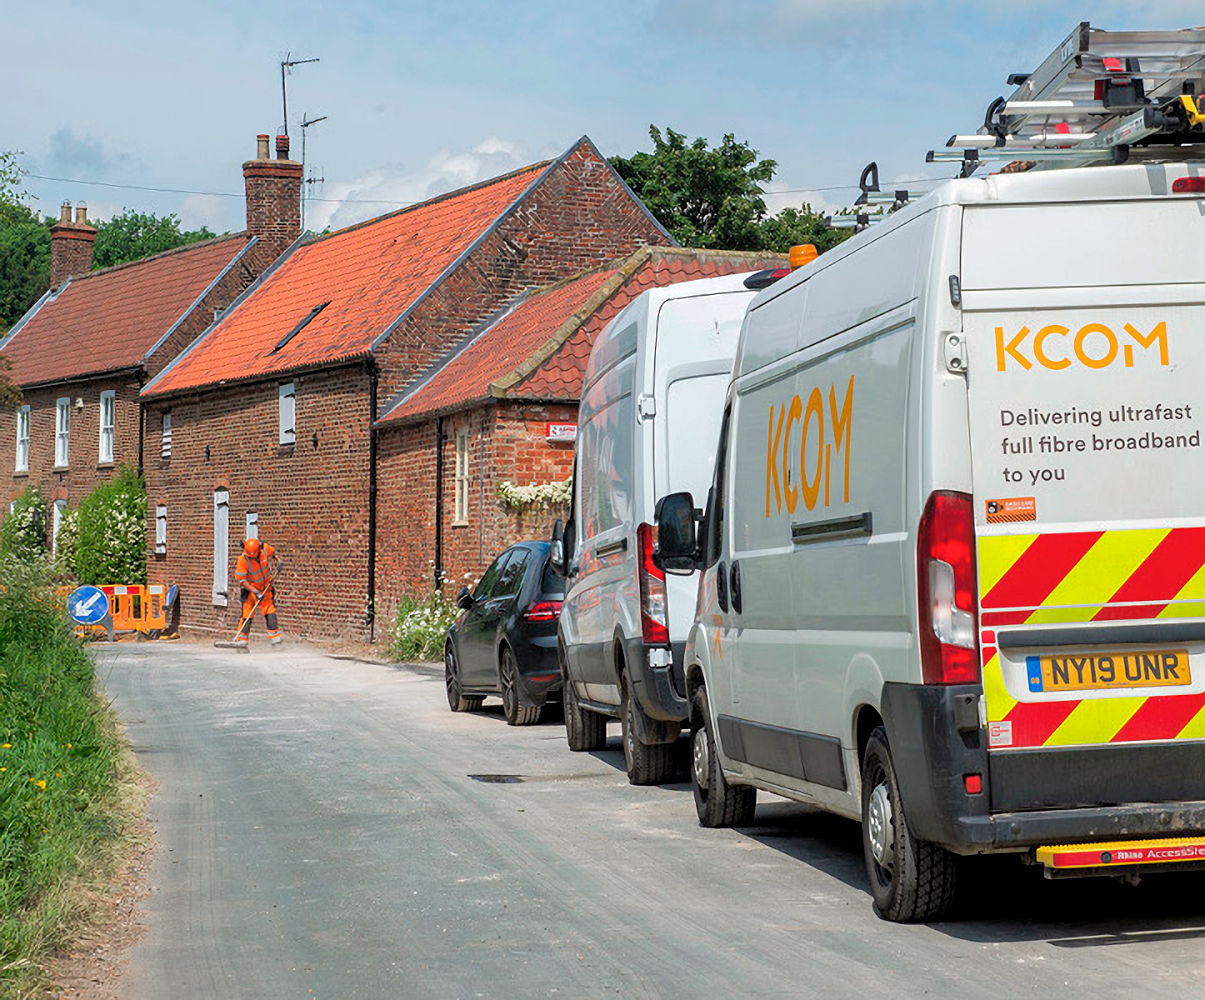 KCOM Engineer Vans on Lane